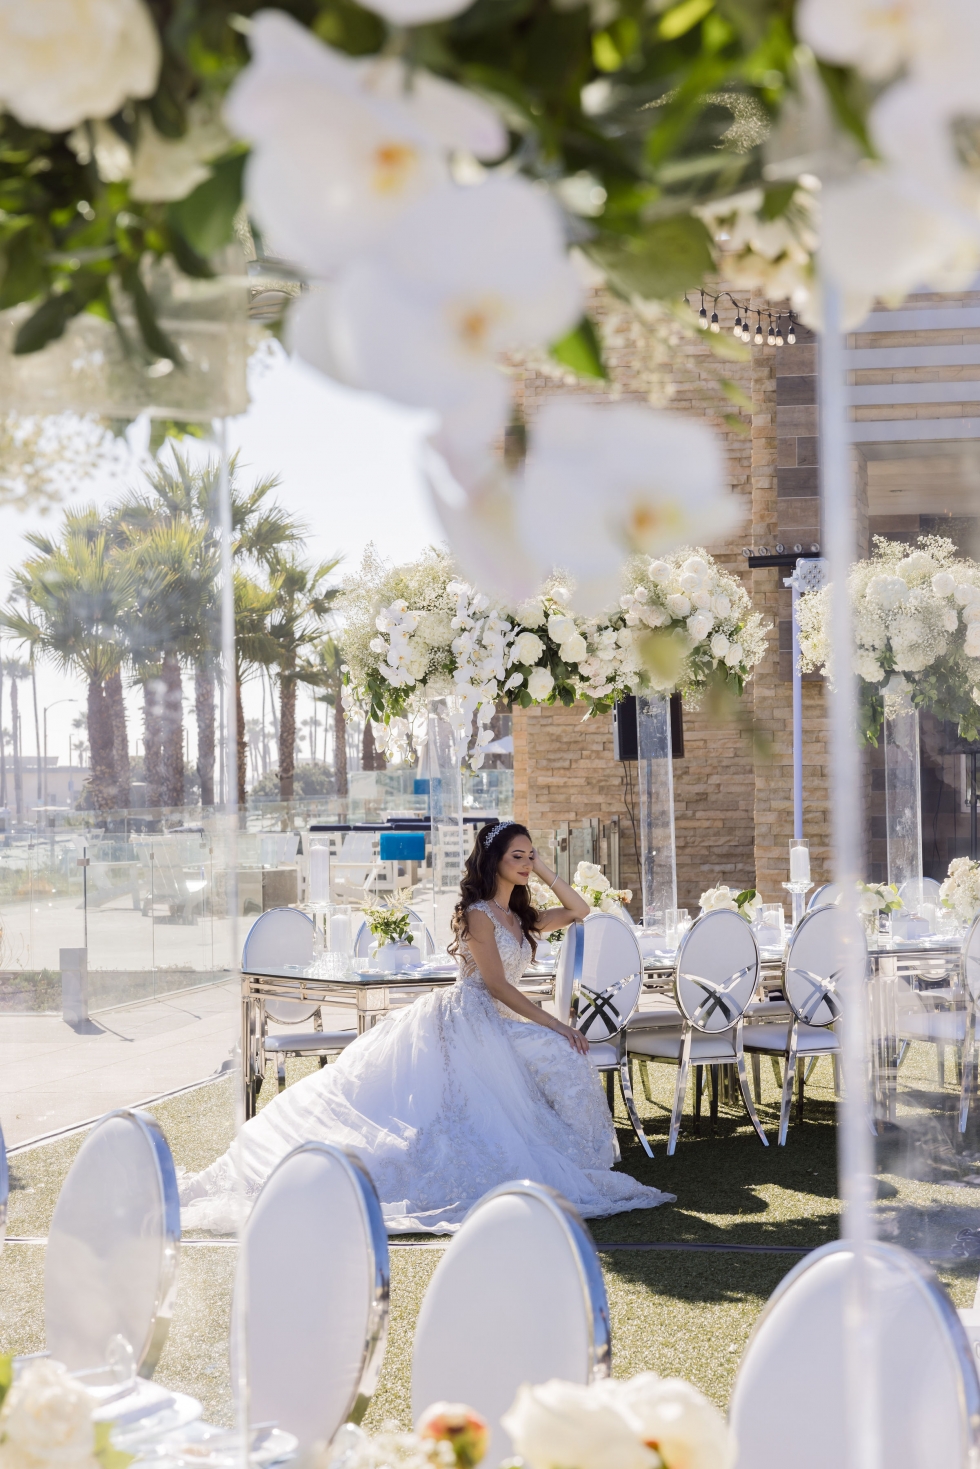 Captivating Elegance: An Arab Wedding in California's Huntington Beach